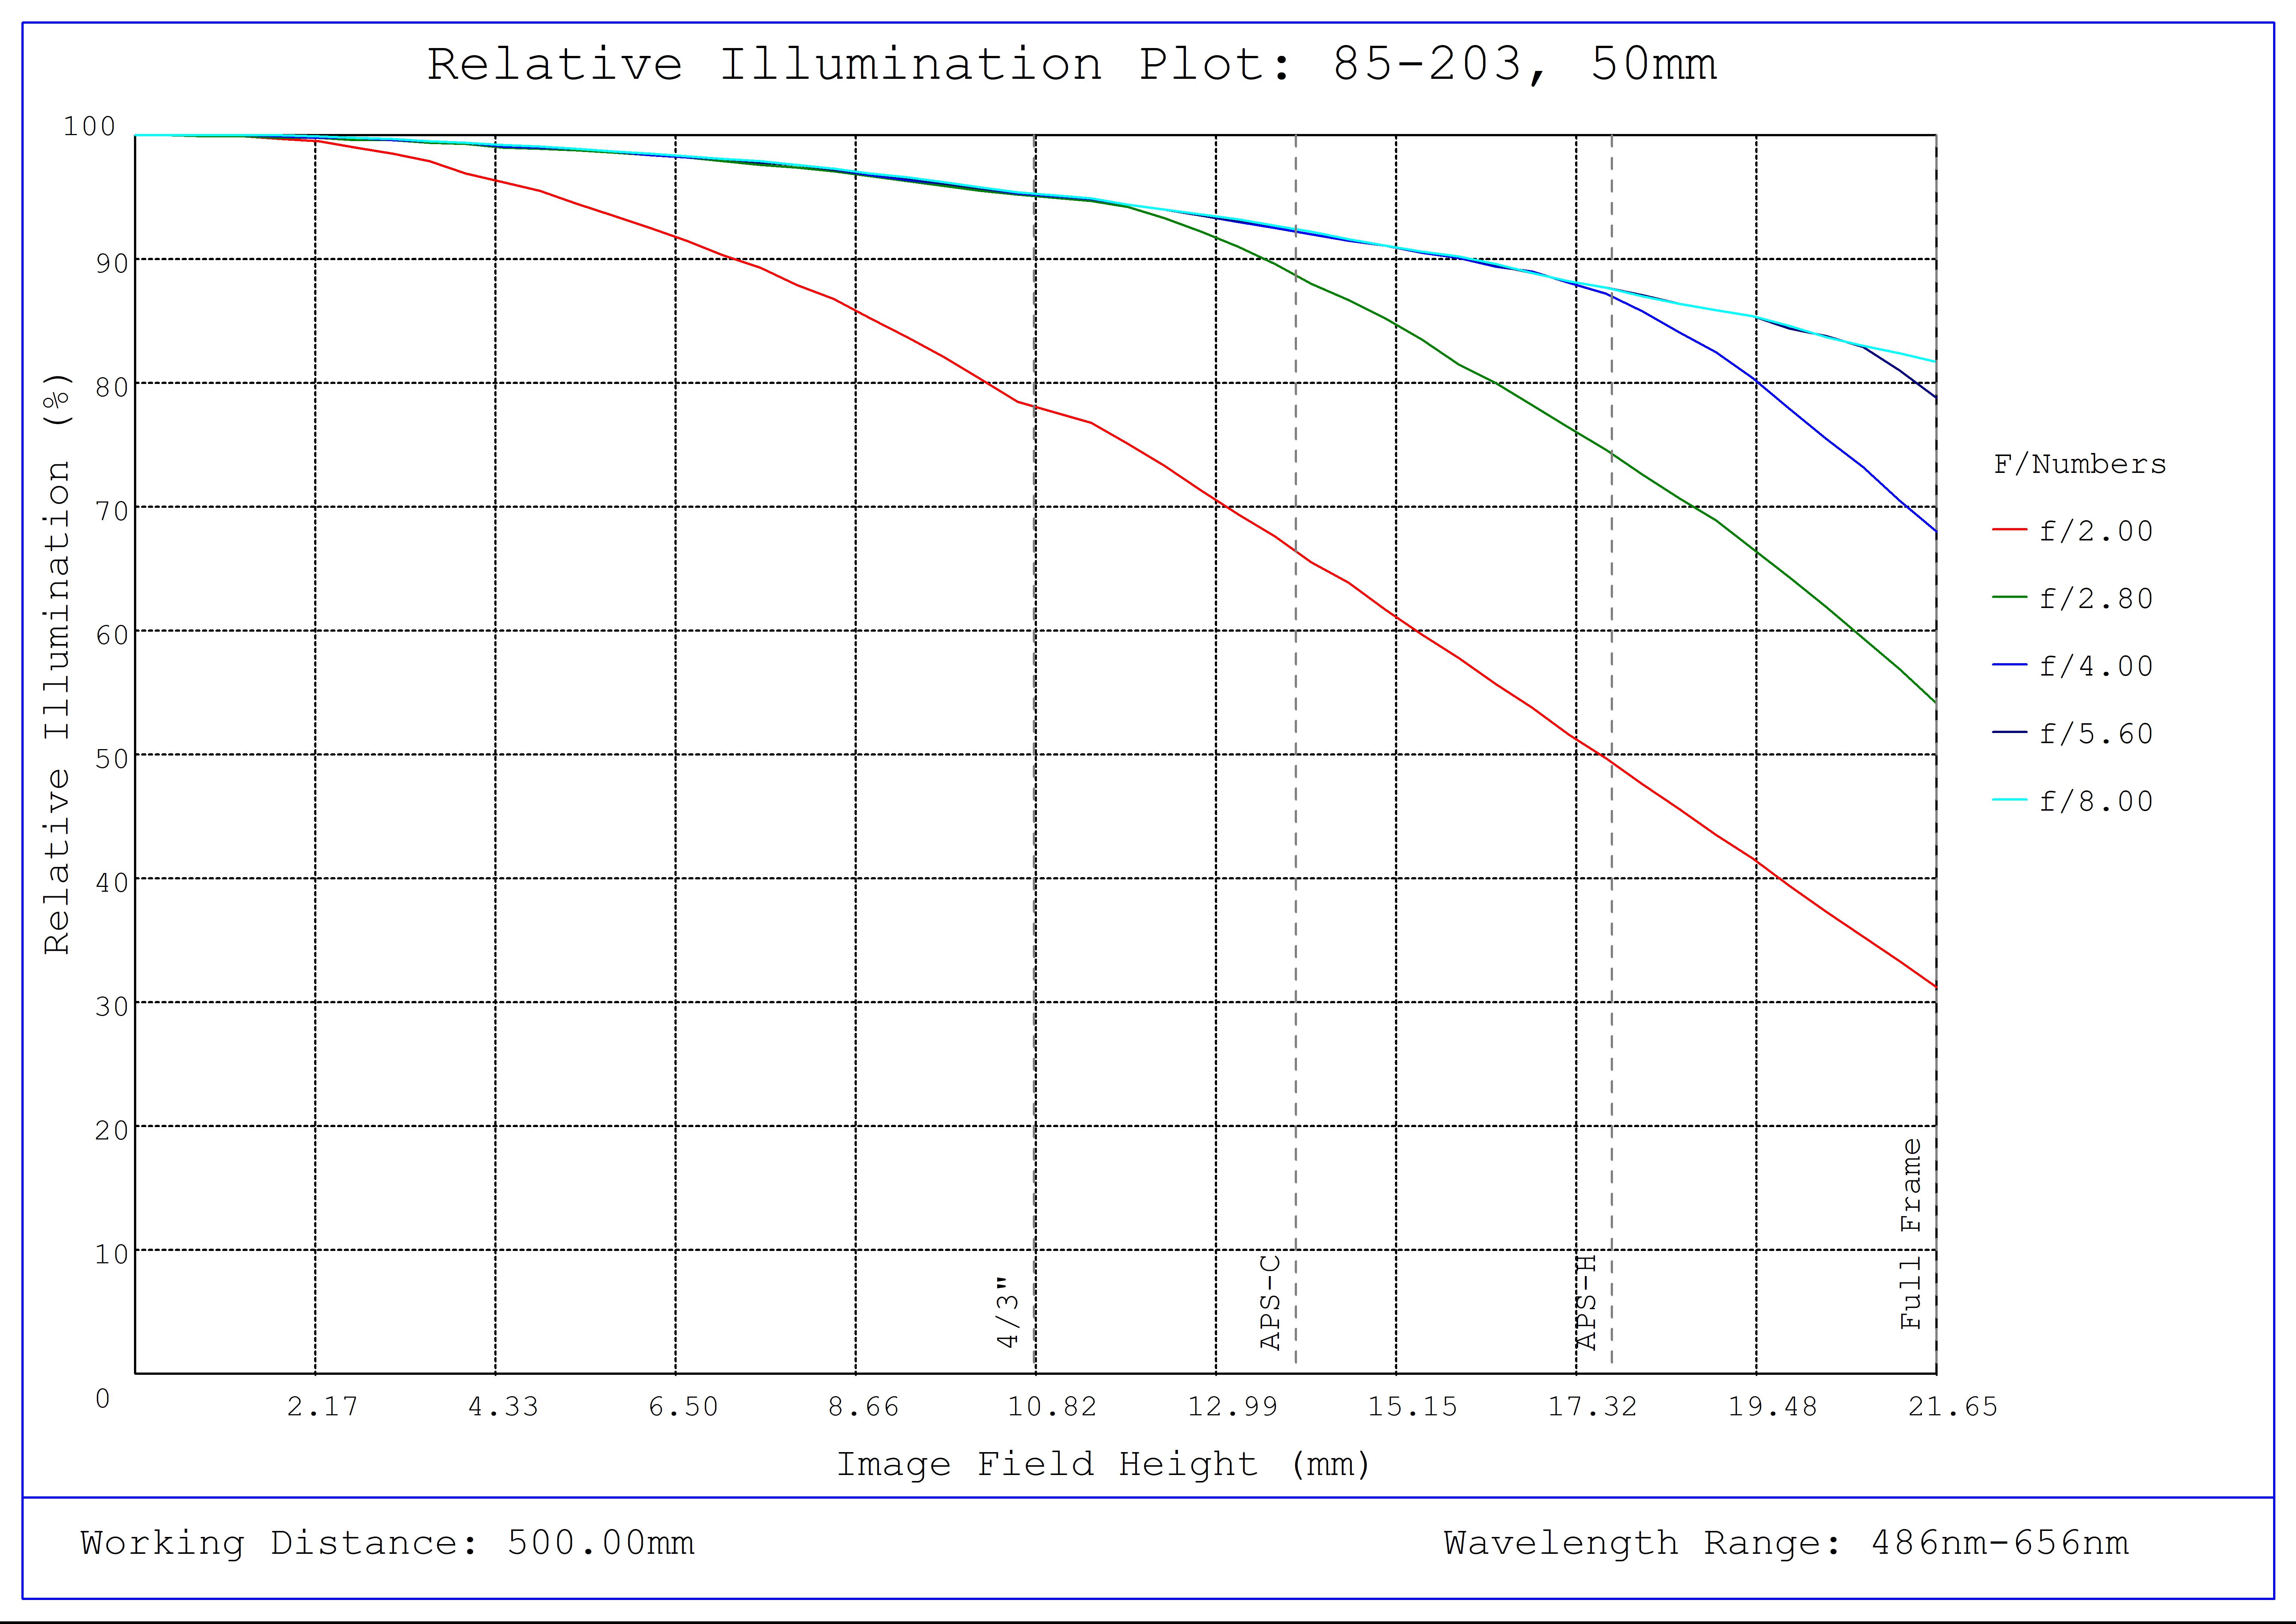 #85-203, 50mm Focal Length, LF Series Fixed Focal Length Lens, Relative Illumination Plot